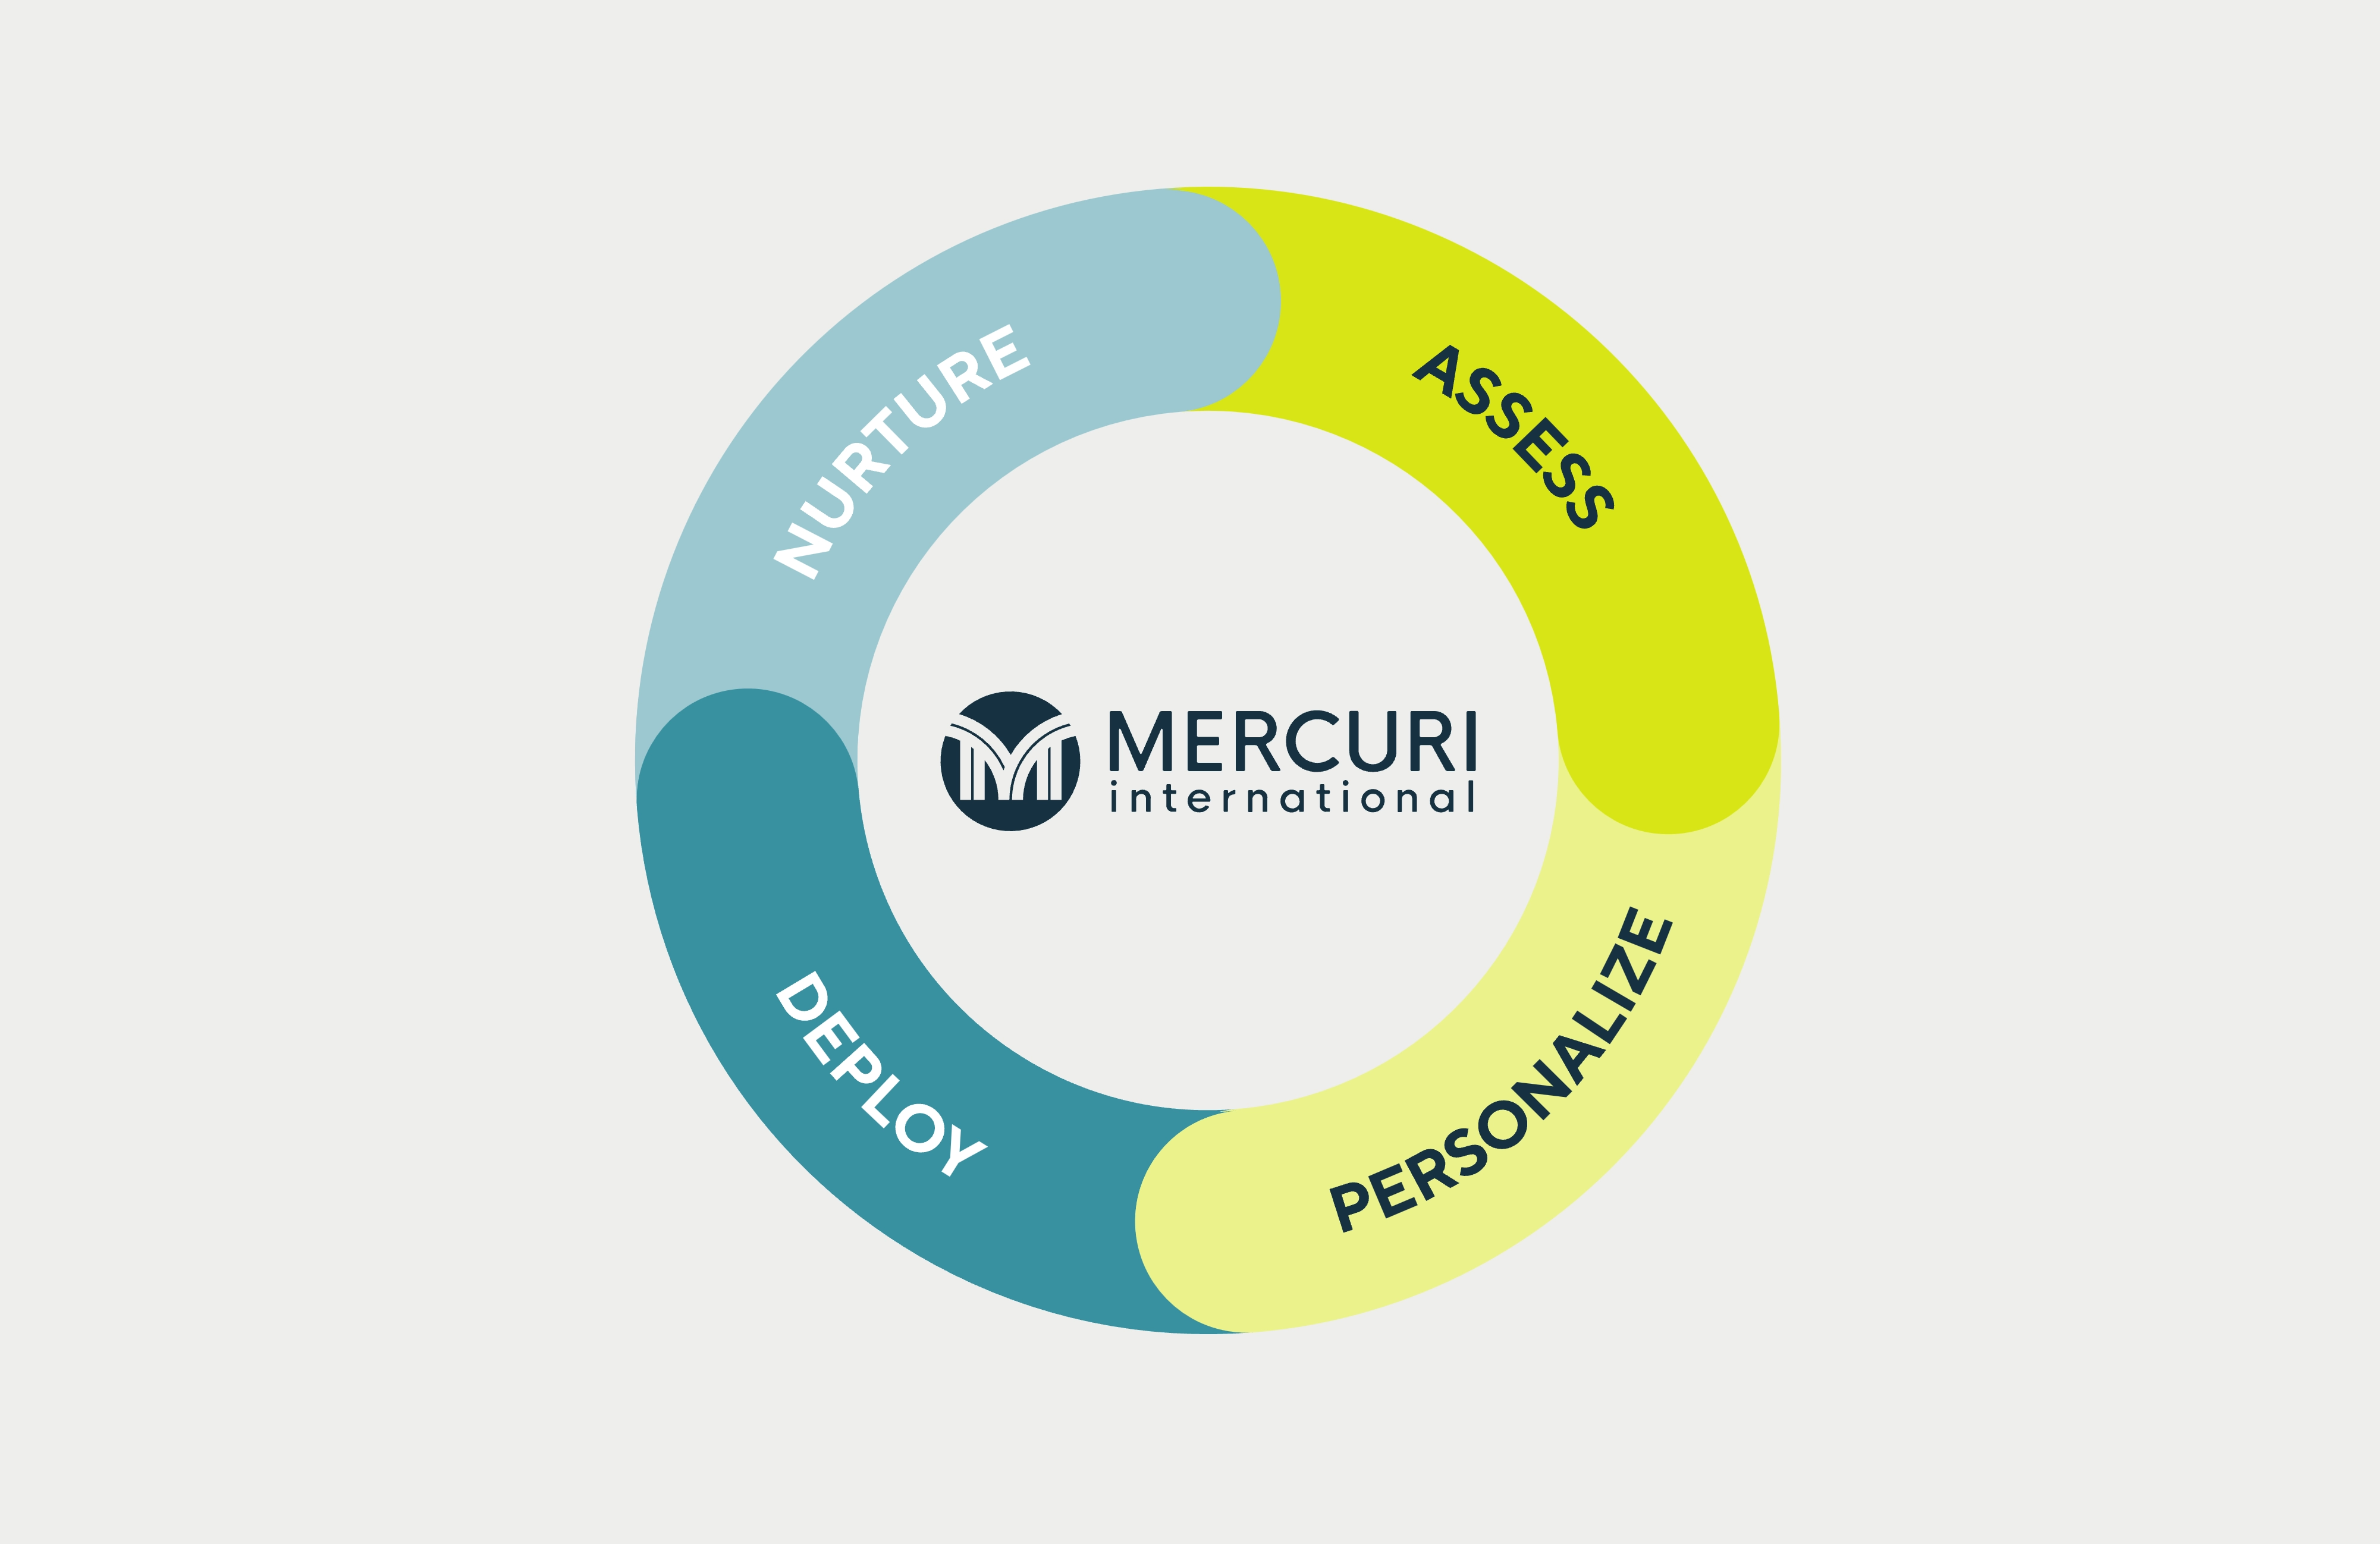 WCAworld Academy & Mercuri International Sales training courses